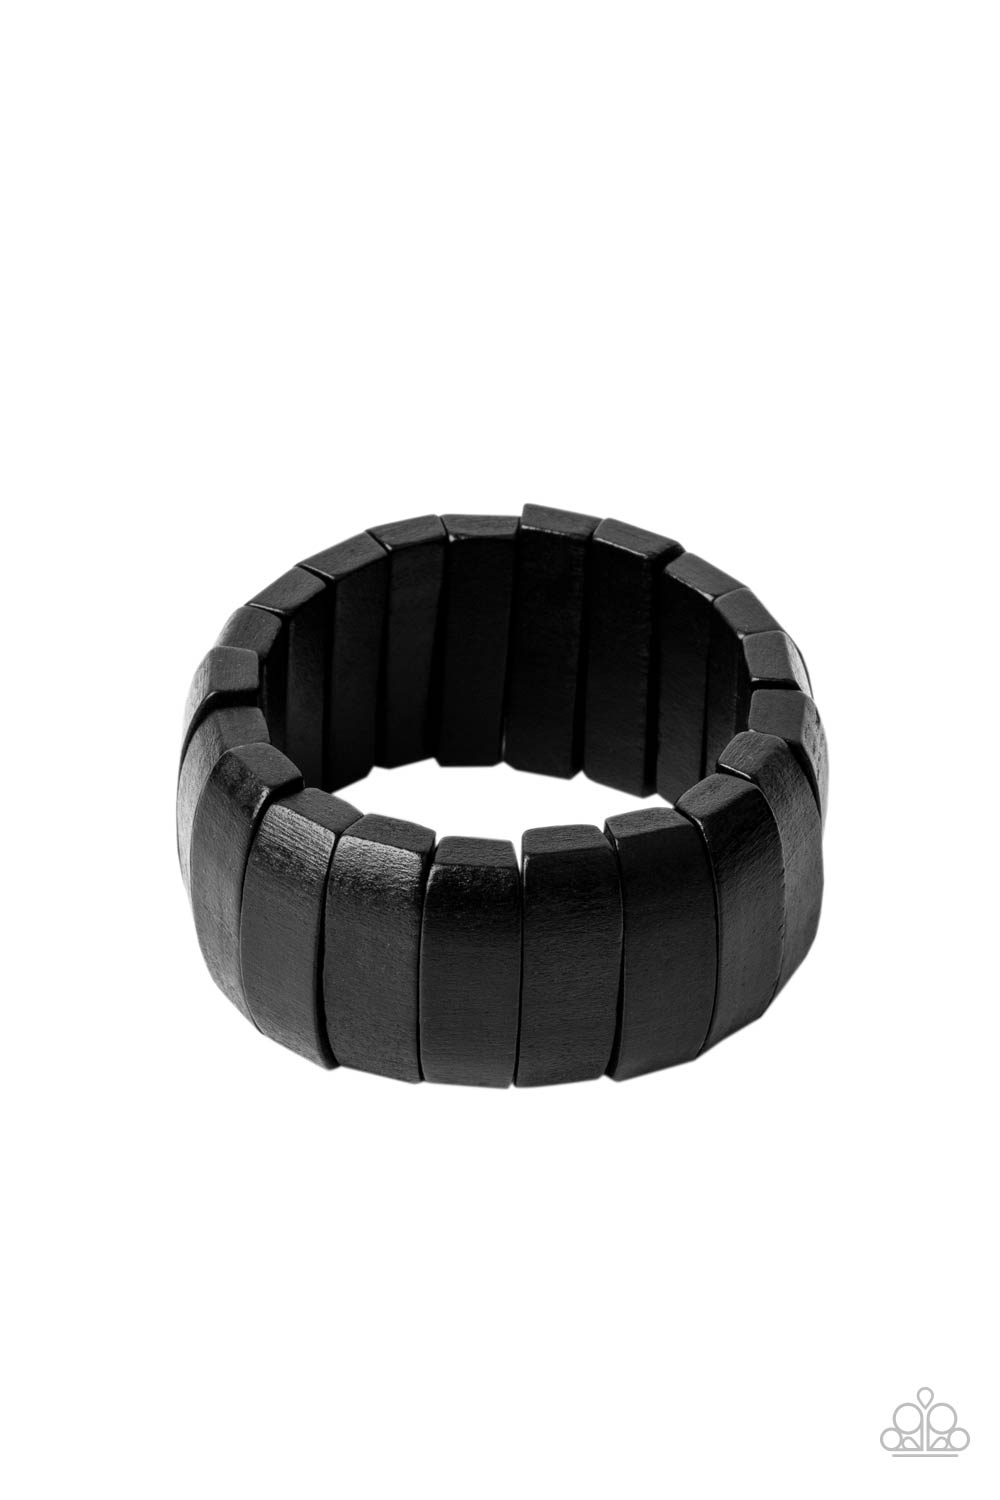 Raise The BARBADOS Black Wood Bracelet - Paparazzi Accessories- lightbox - CarasShop.com - $5 Jewelry by Cara Jewels